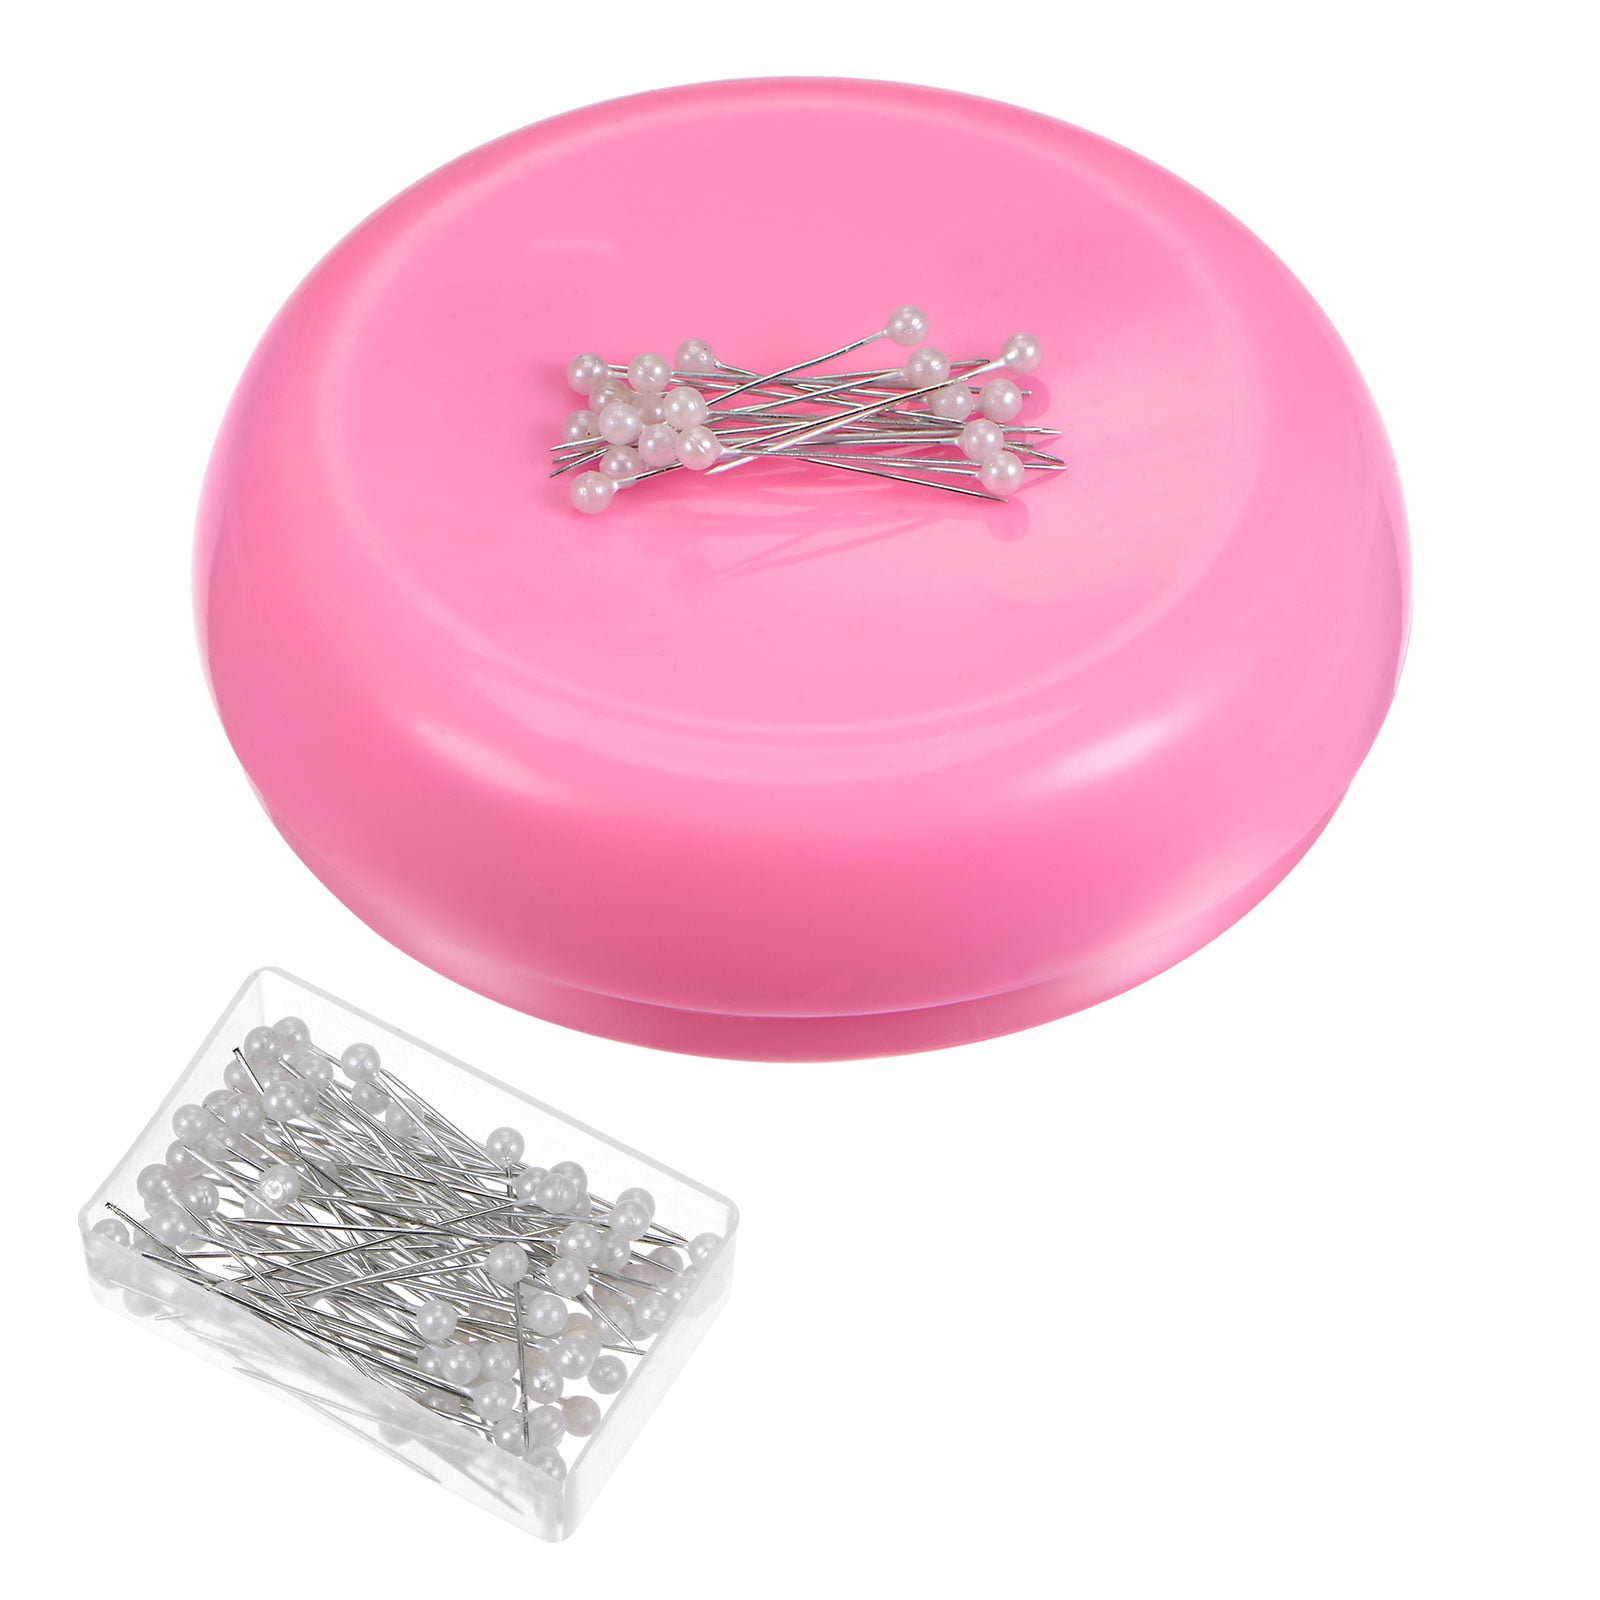  Magnetic Sewing Pincushion, 3Pcs Round Plastic